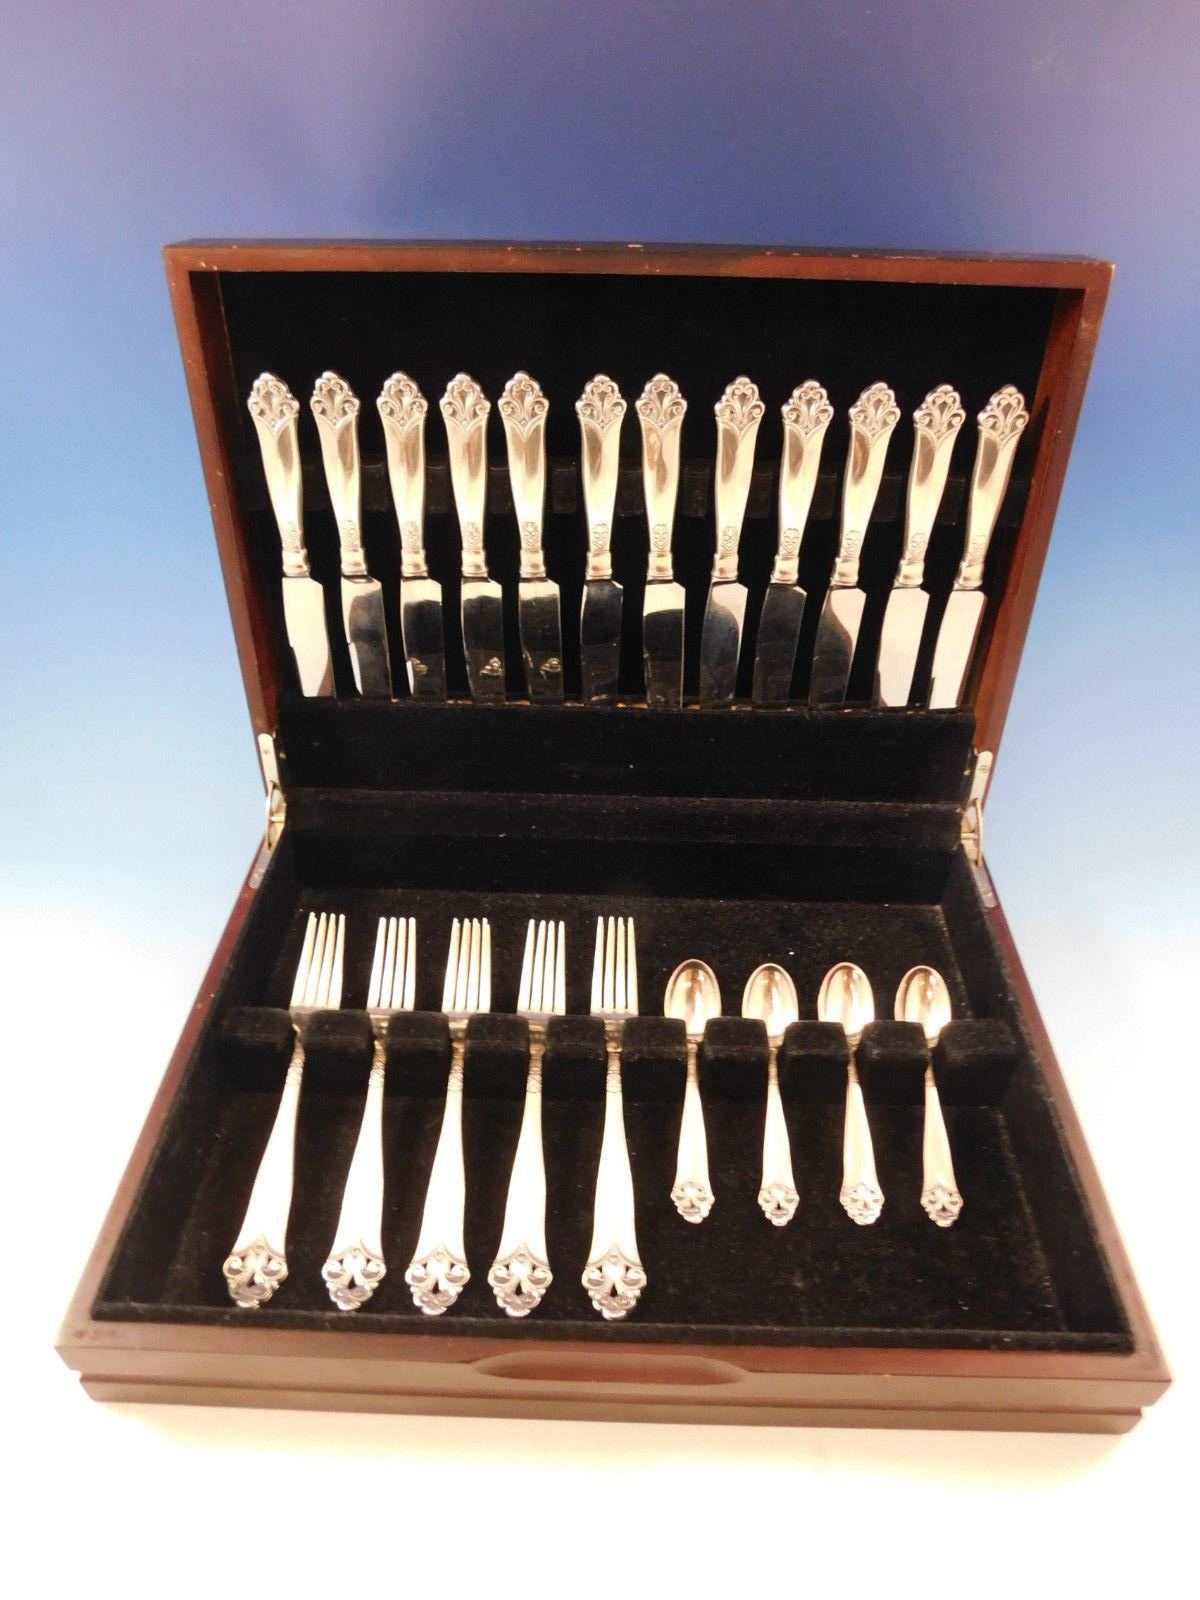 Lillemor by Marthinsen, Norway, pierced handle 830 Silver Dessert set - 36 pieces. This set includes:

12 dessert knives, 8 5/8